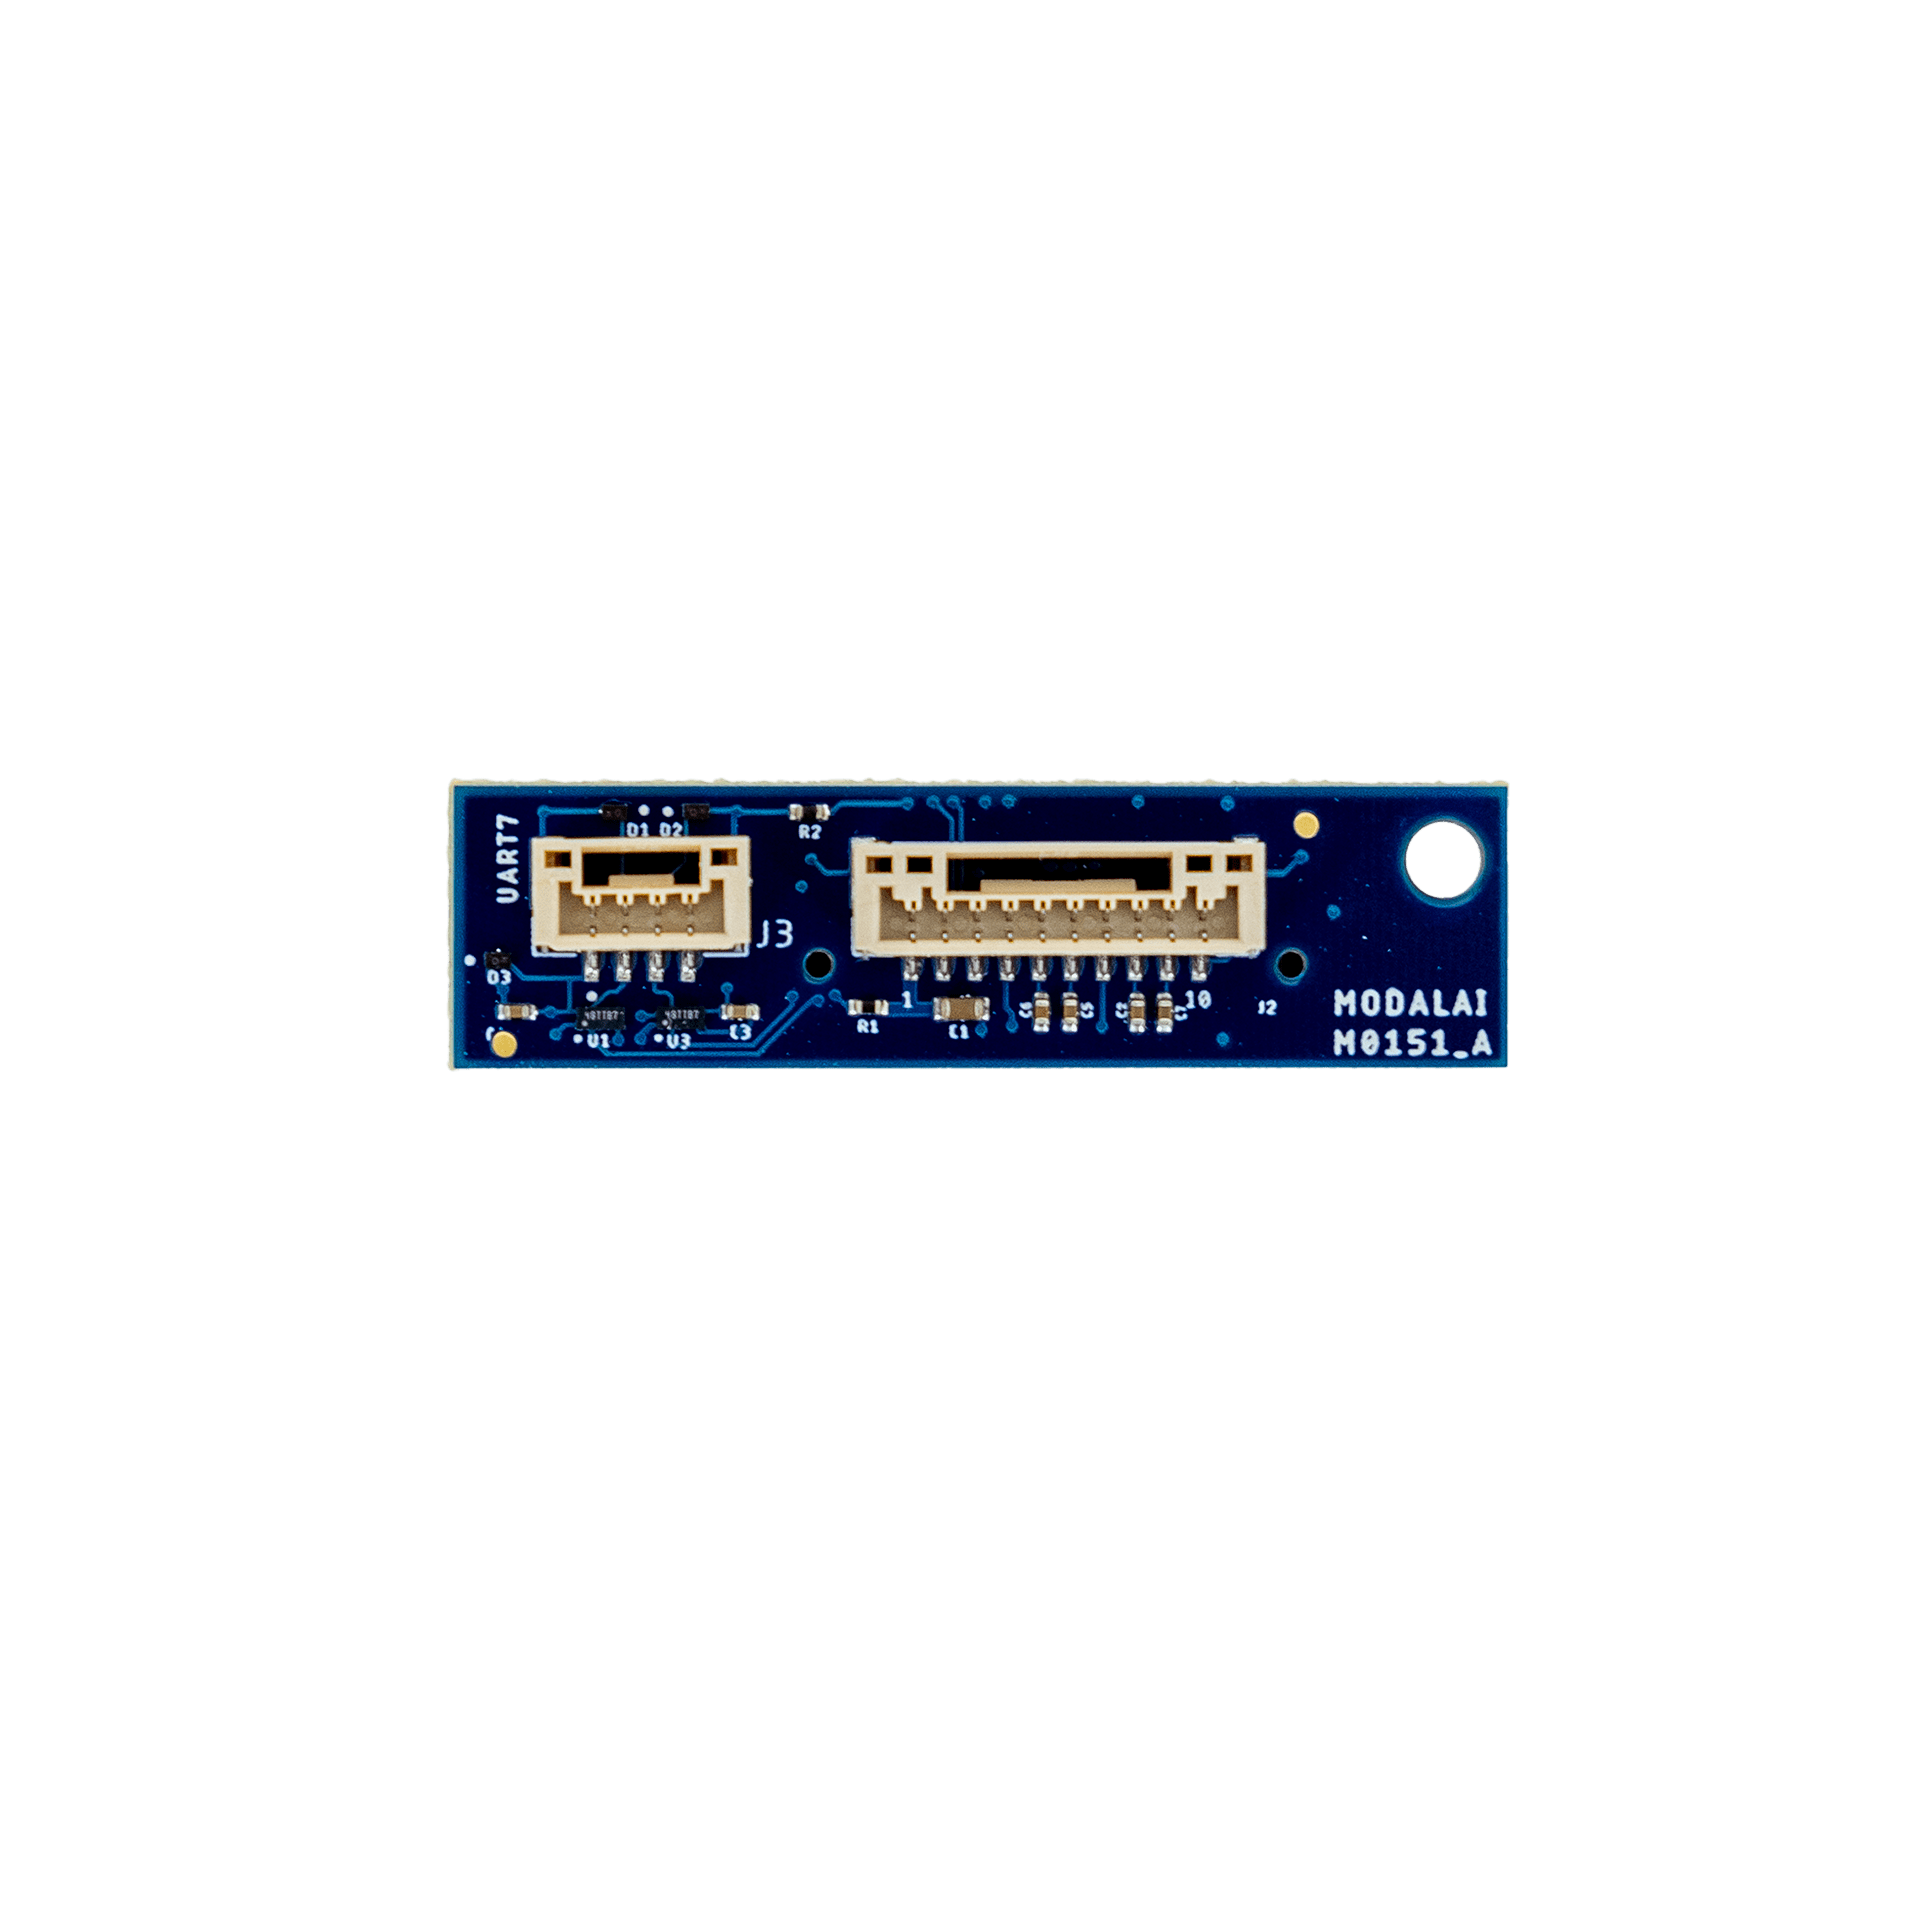 ModalAI, Inc. Accessory VOXL 2 USB3.0 / UART Expansion Adapter